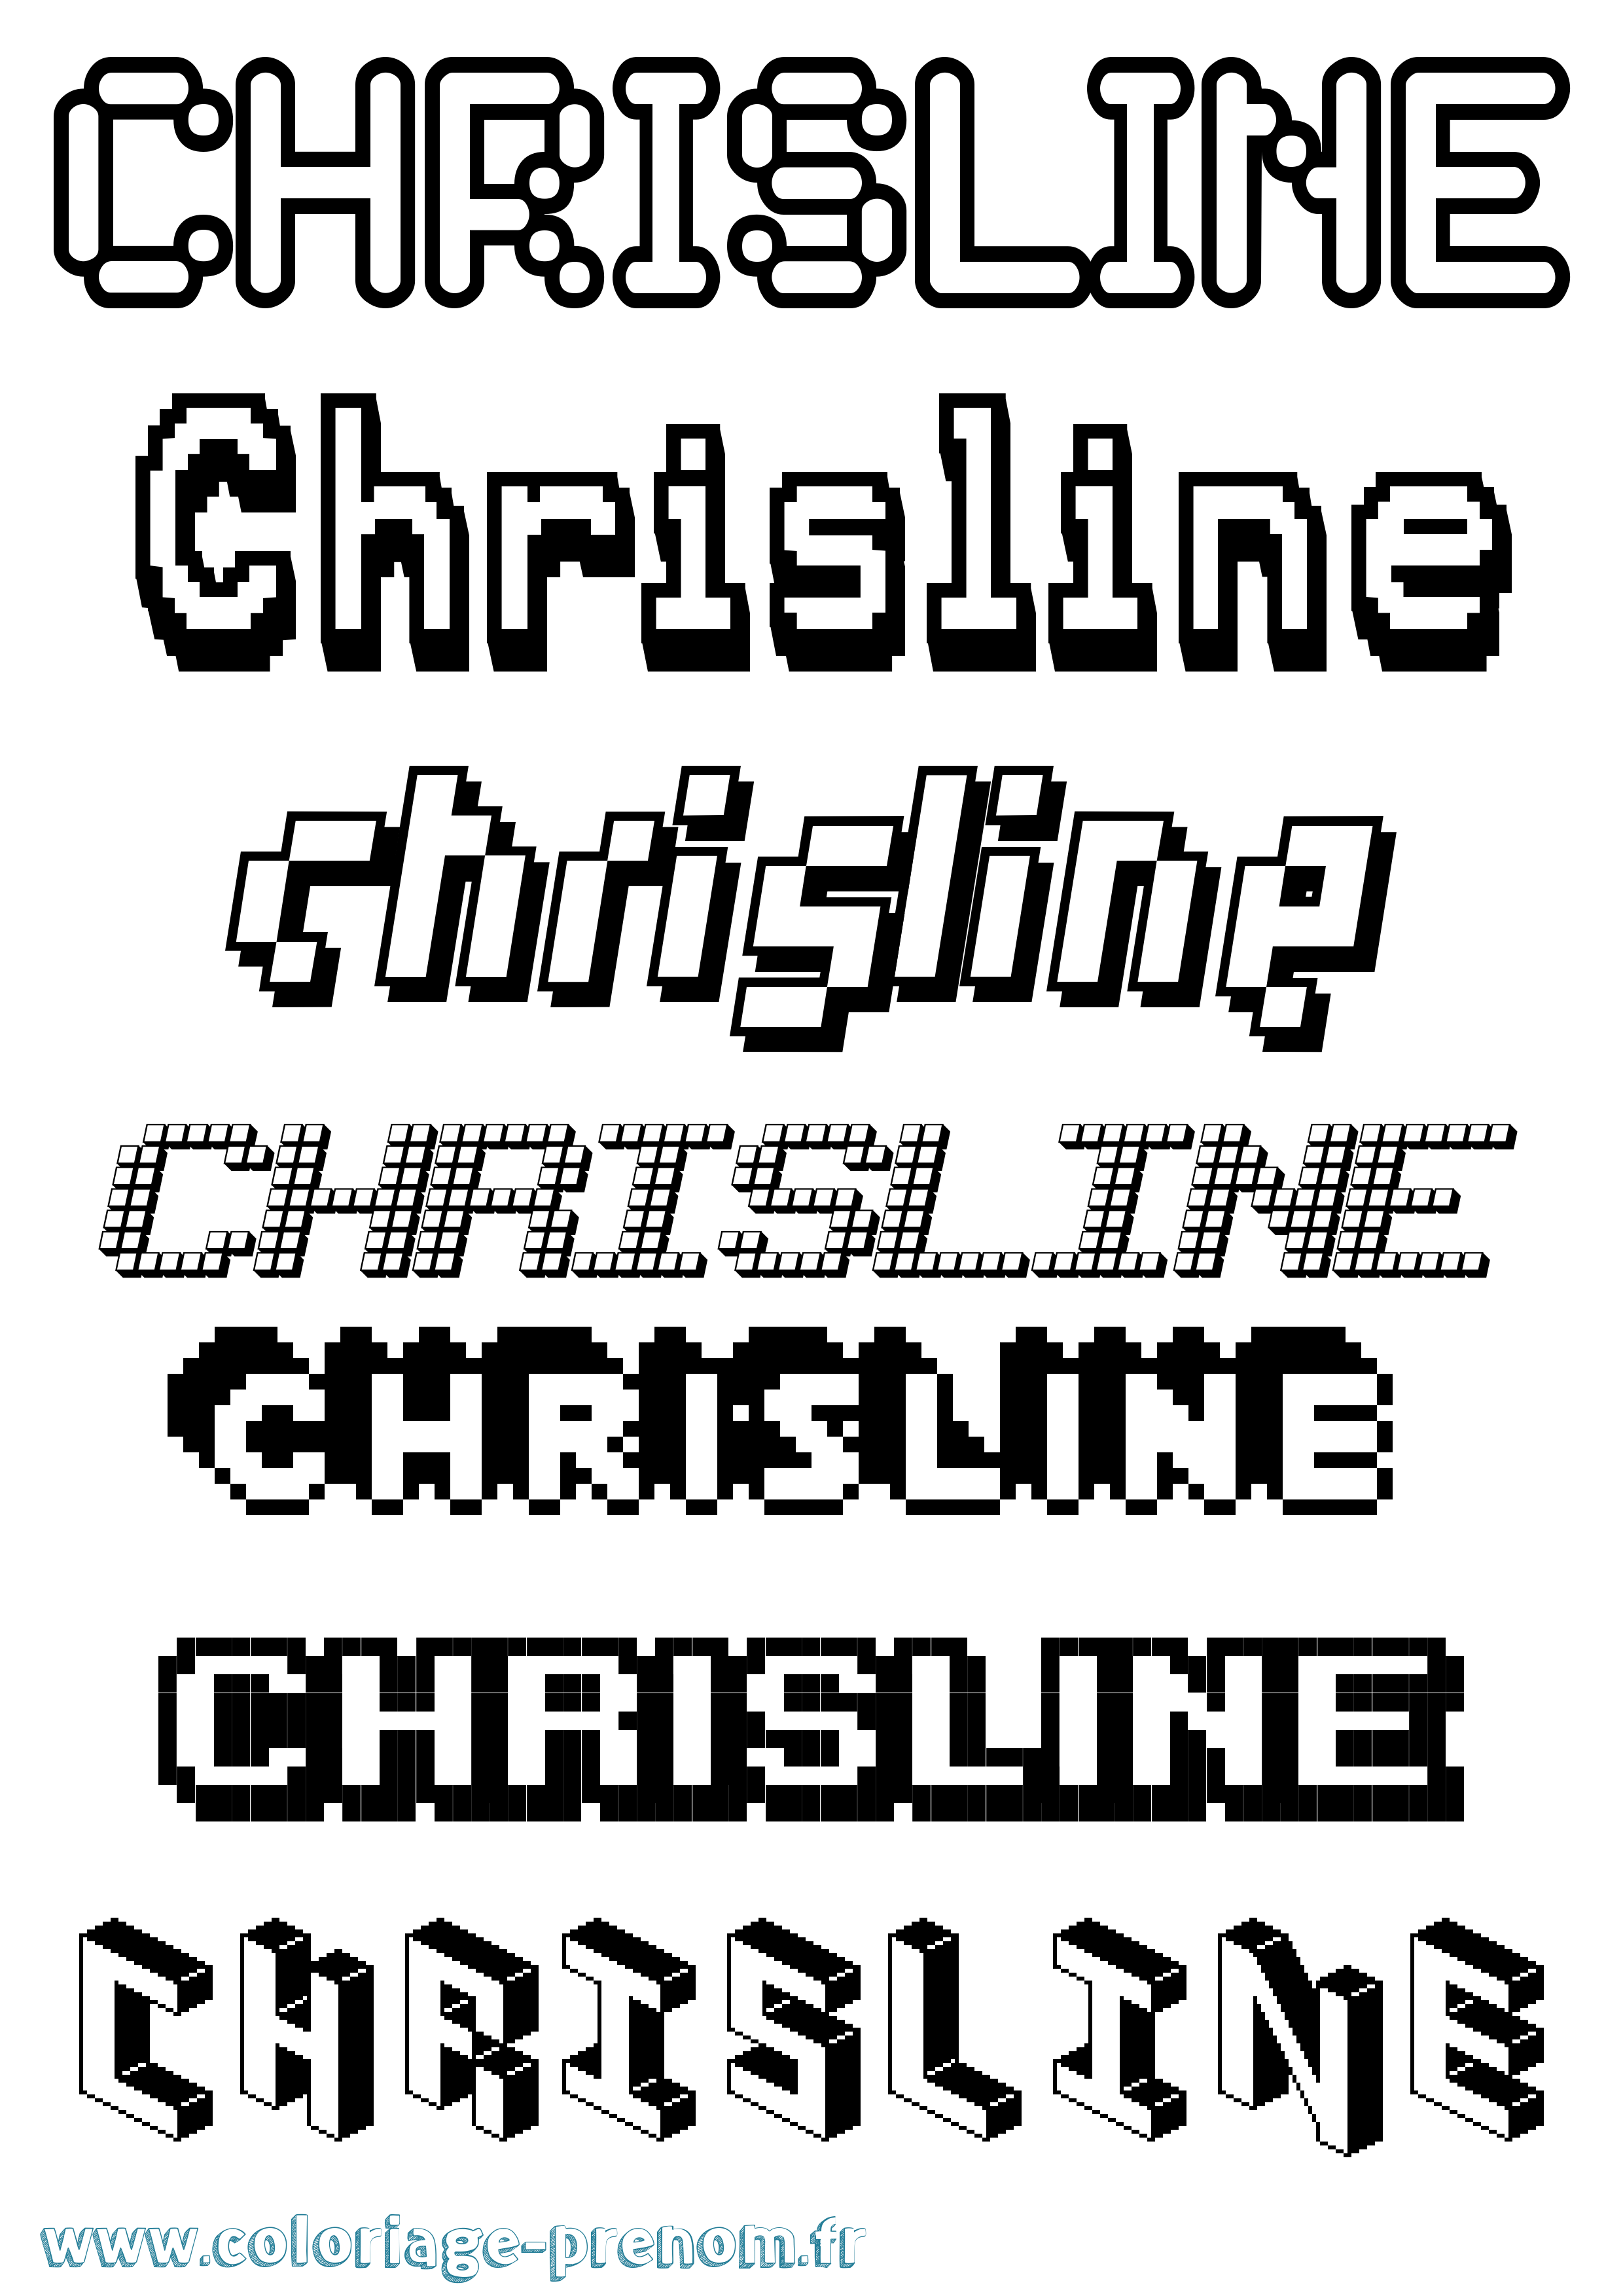 Coloriage prénom Chrisline Pixel